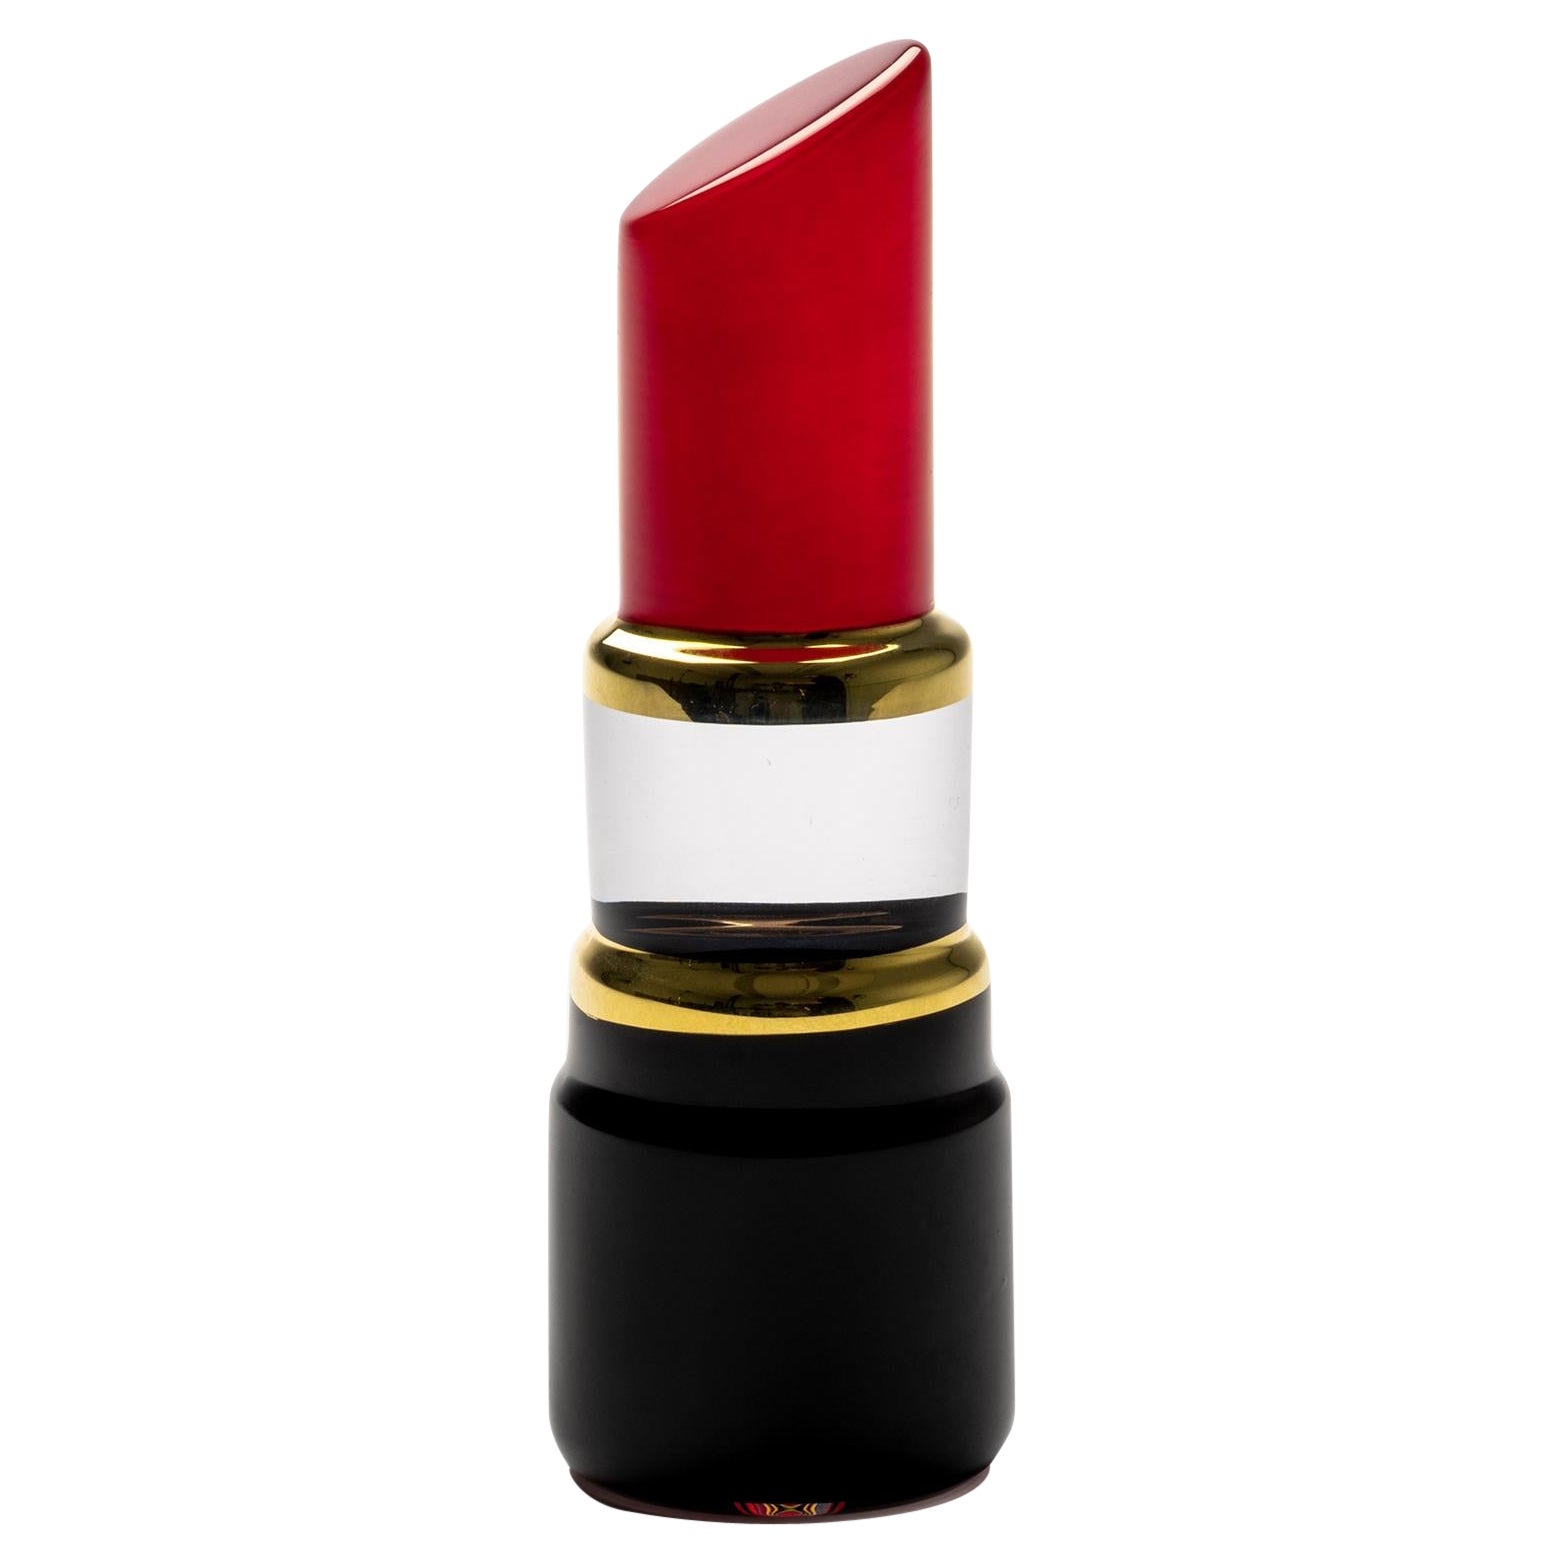 Kosta Boda Make Up Lipstick Poppy Red  For Sale